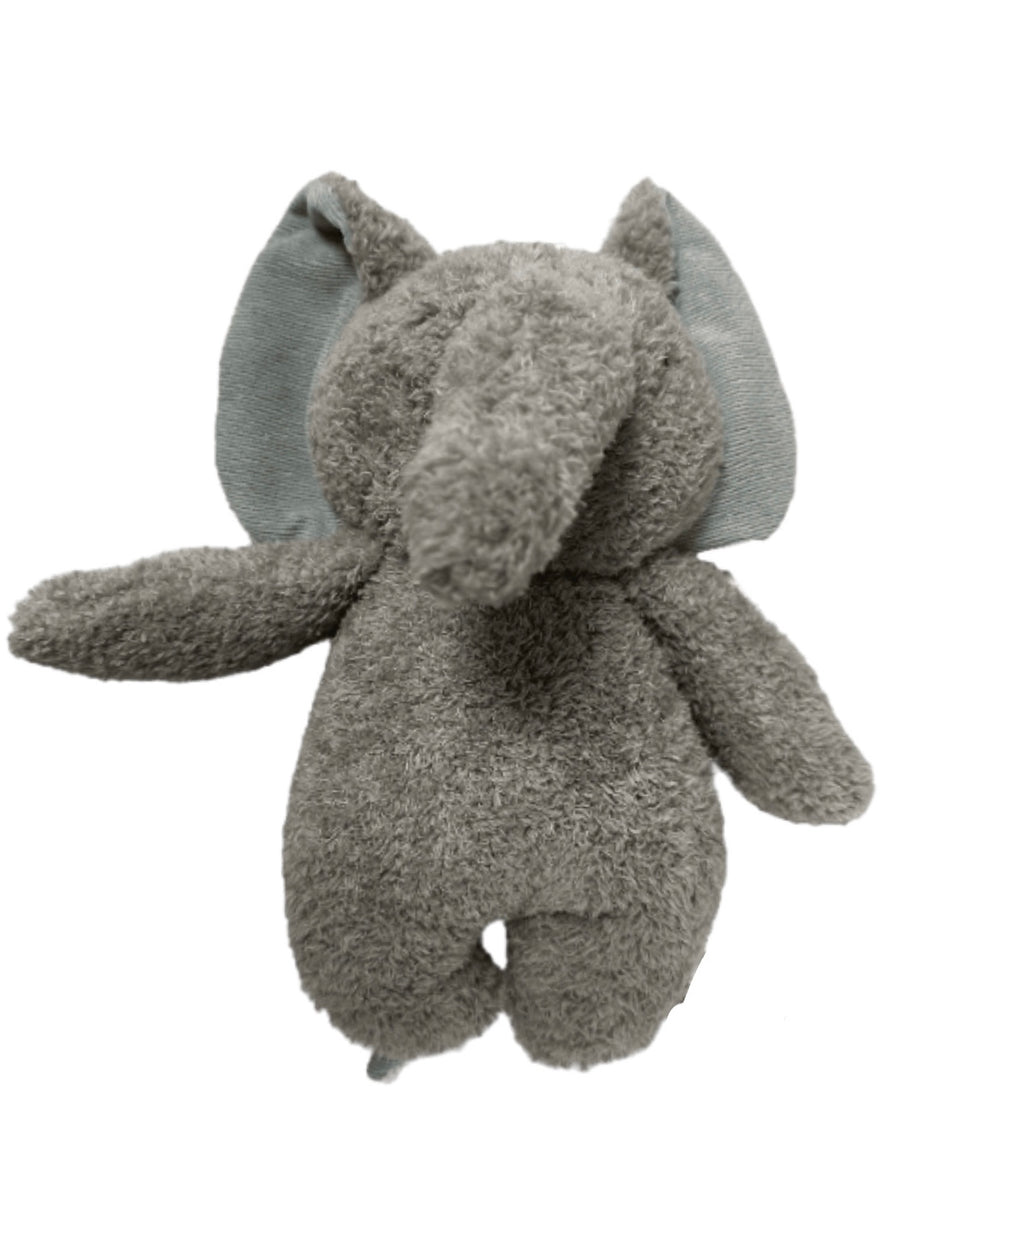 Plush baby elephant great baby gift